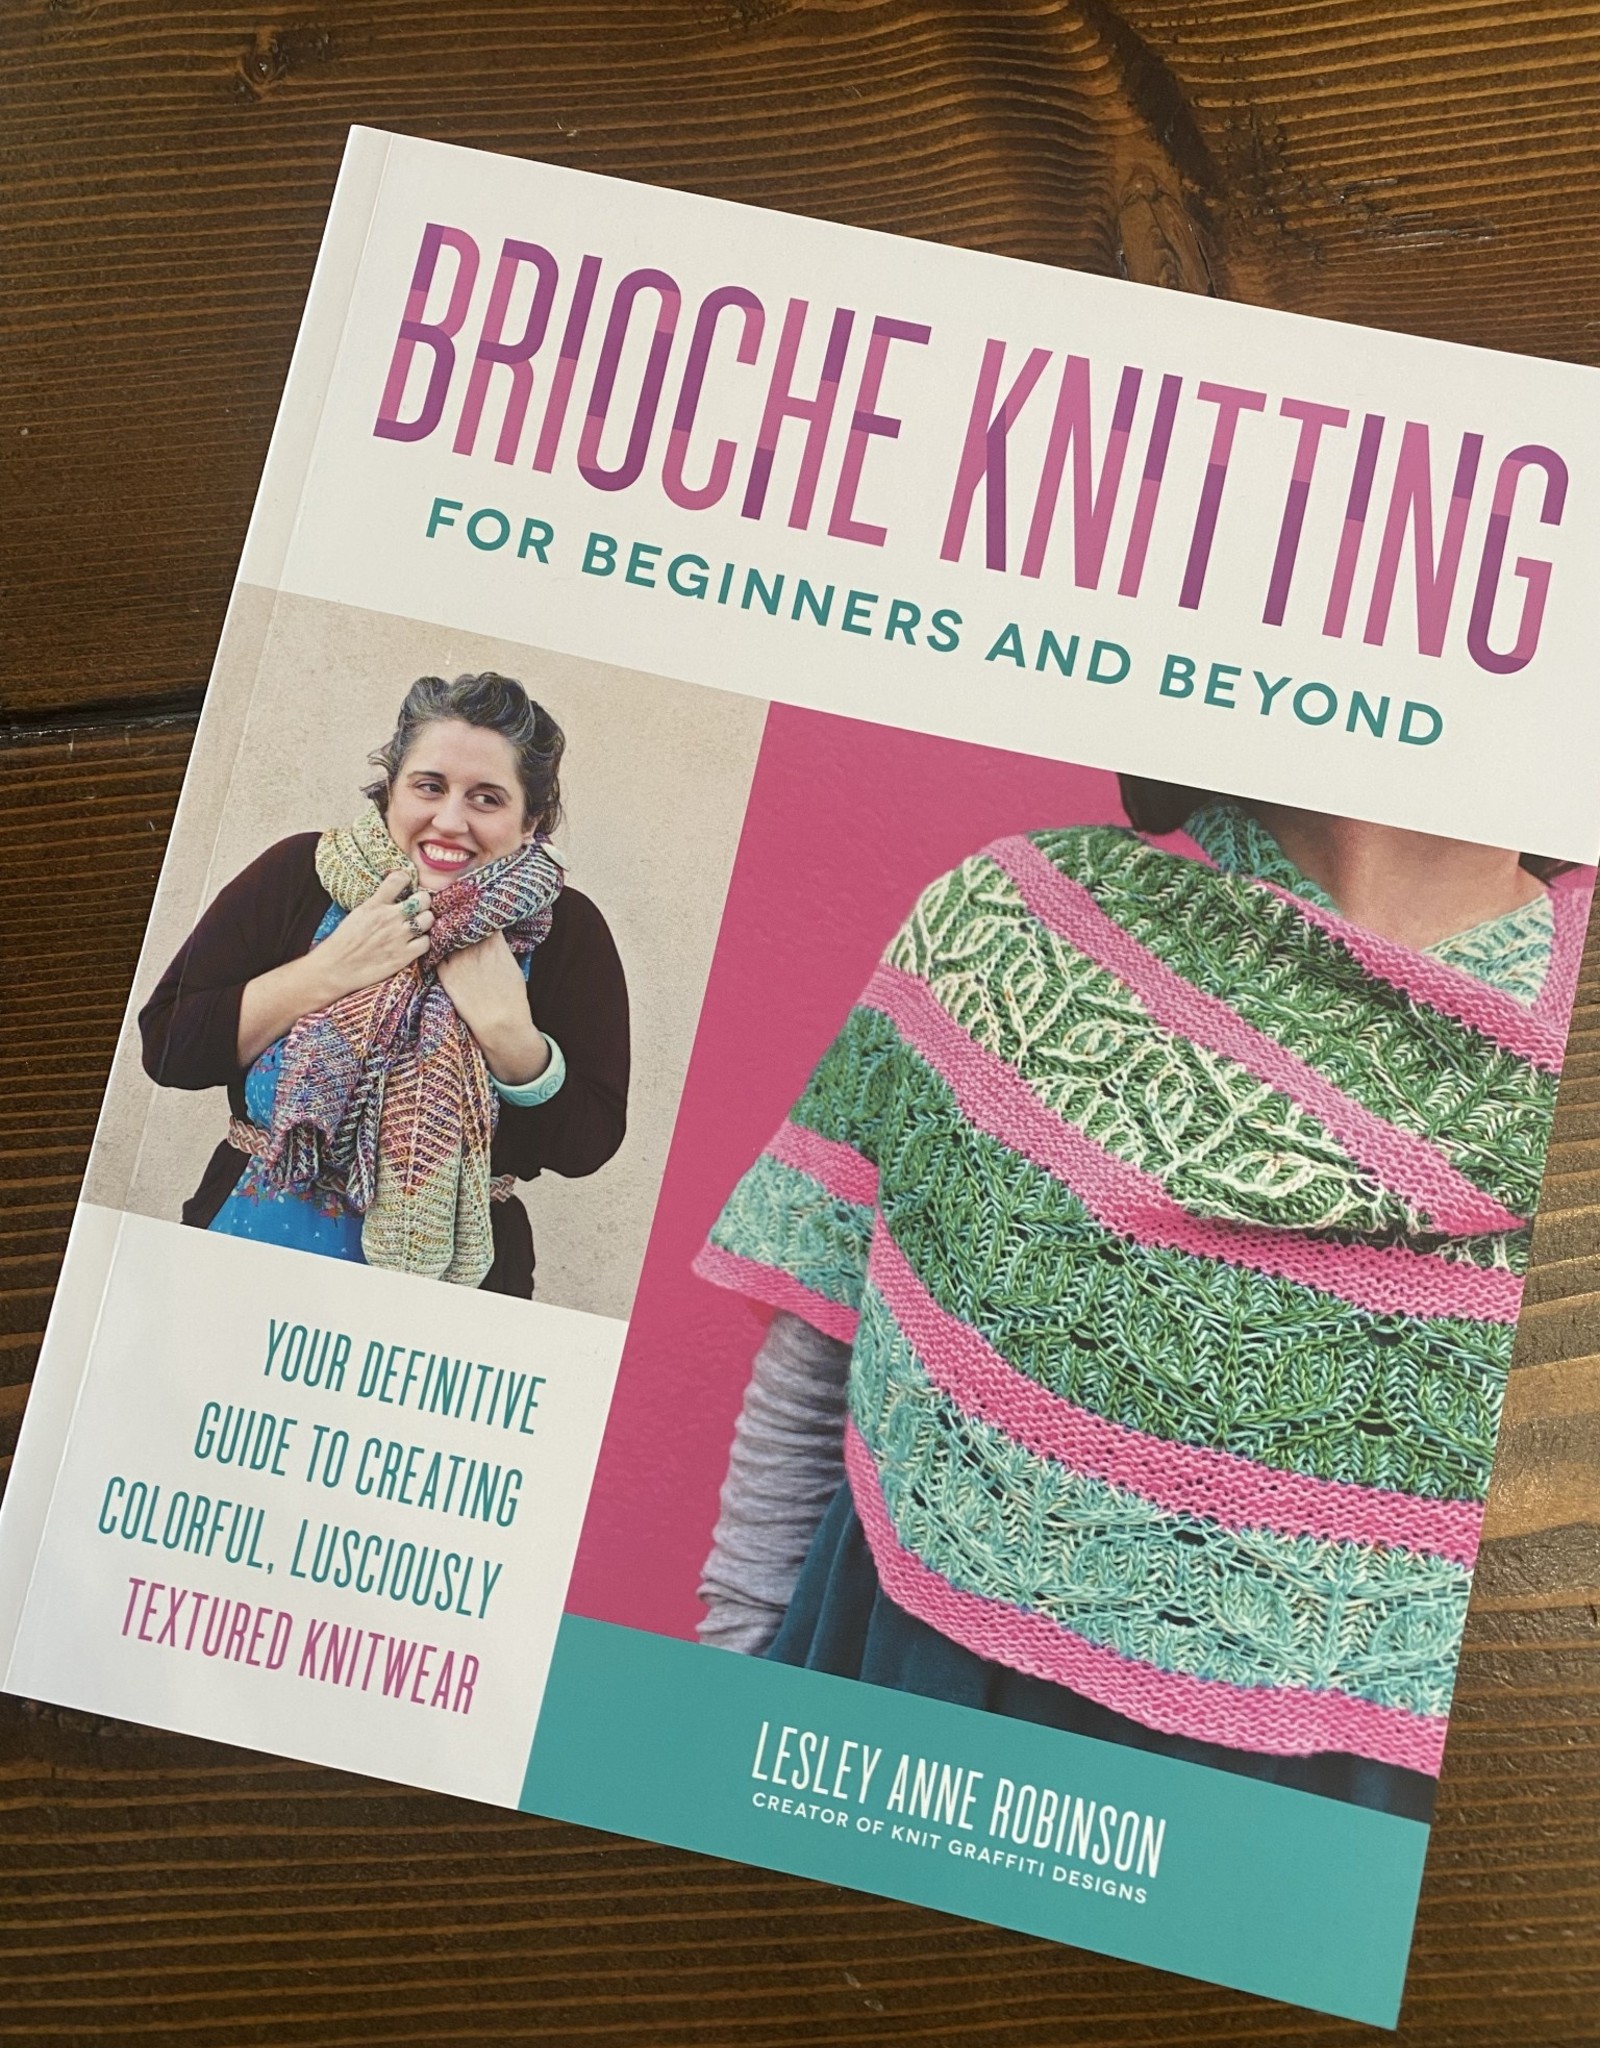 KnitGraffiti Brioche Knitting for Beginners and Beyond